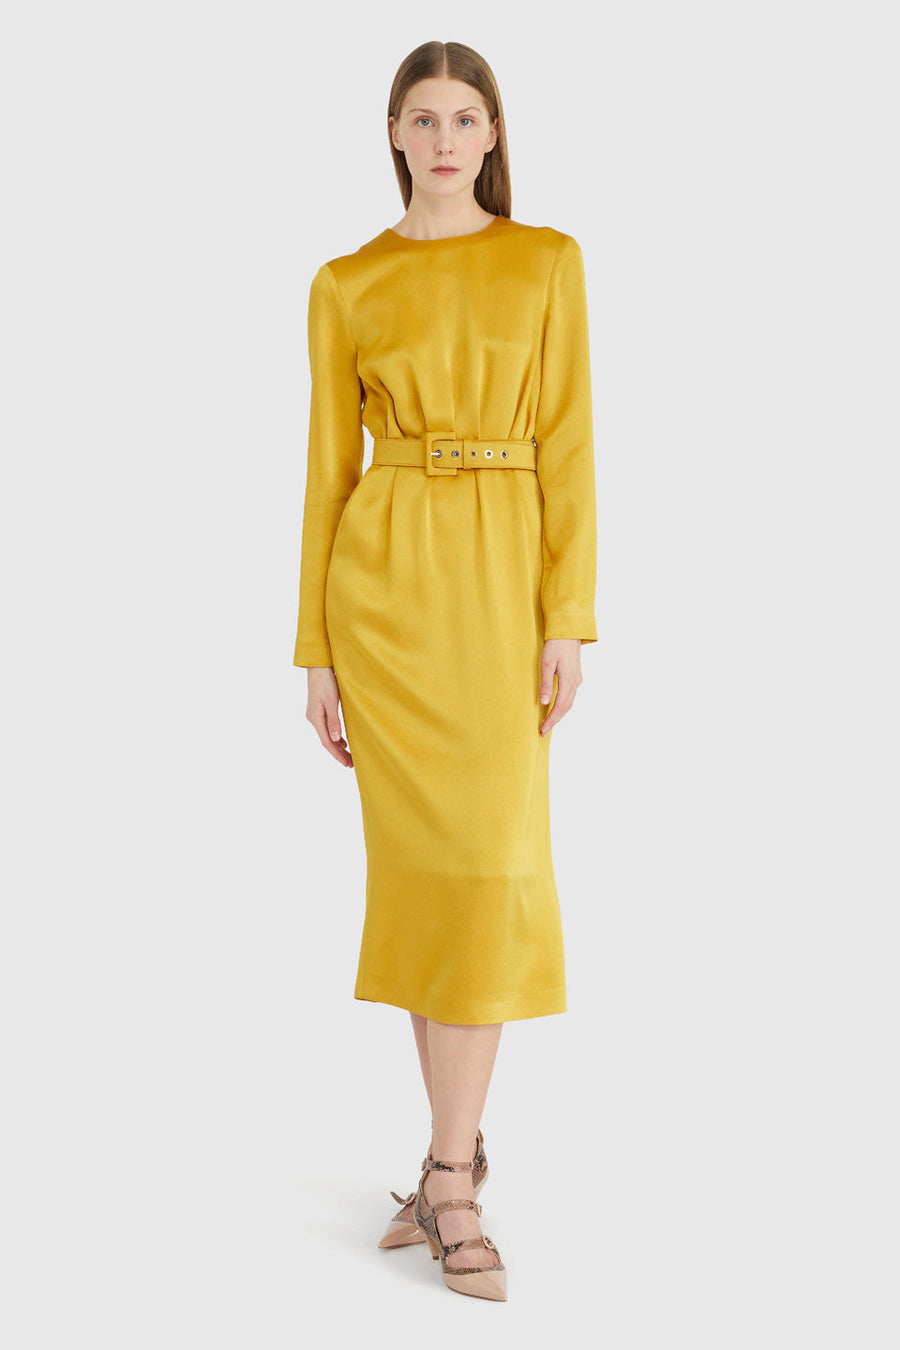 rochas long sleeves midid dress yellow figure front